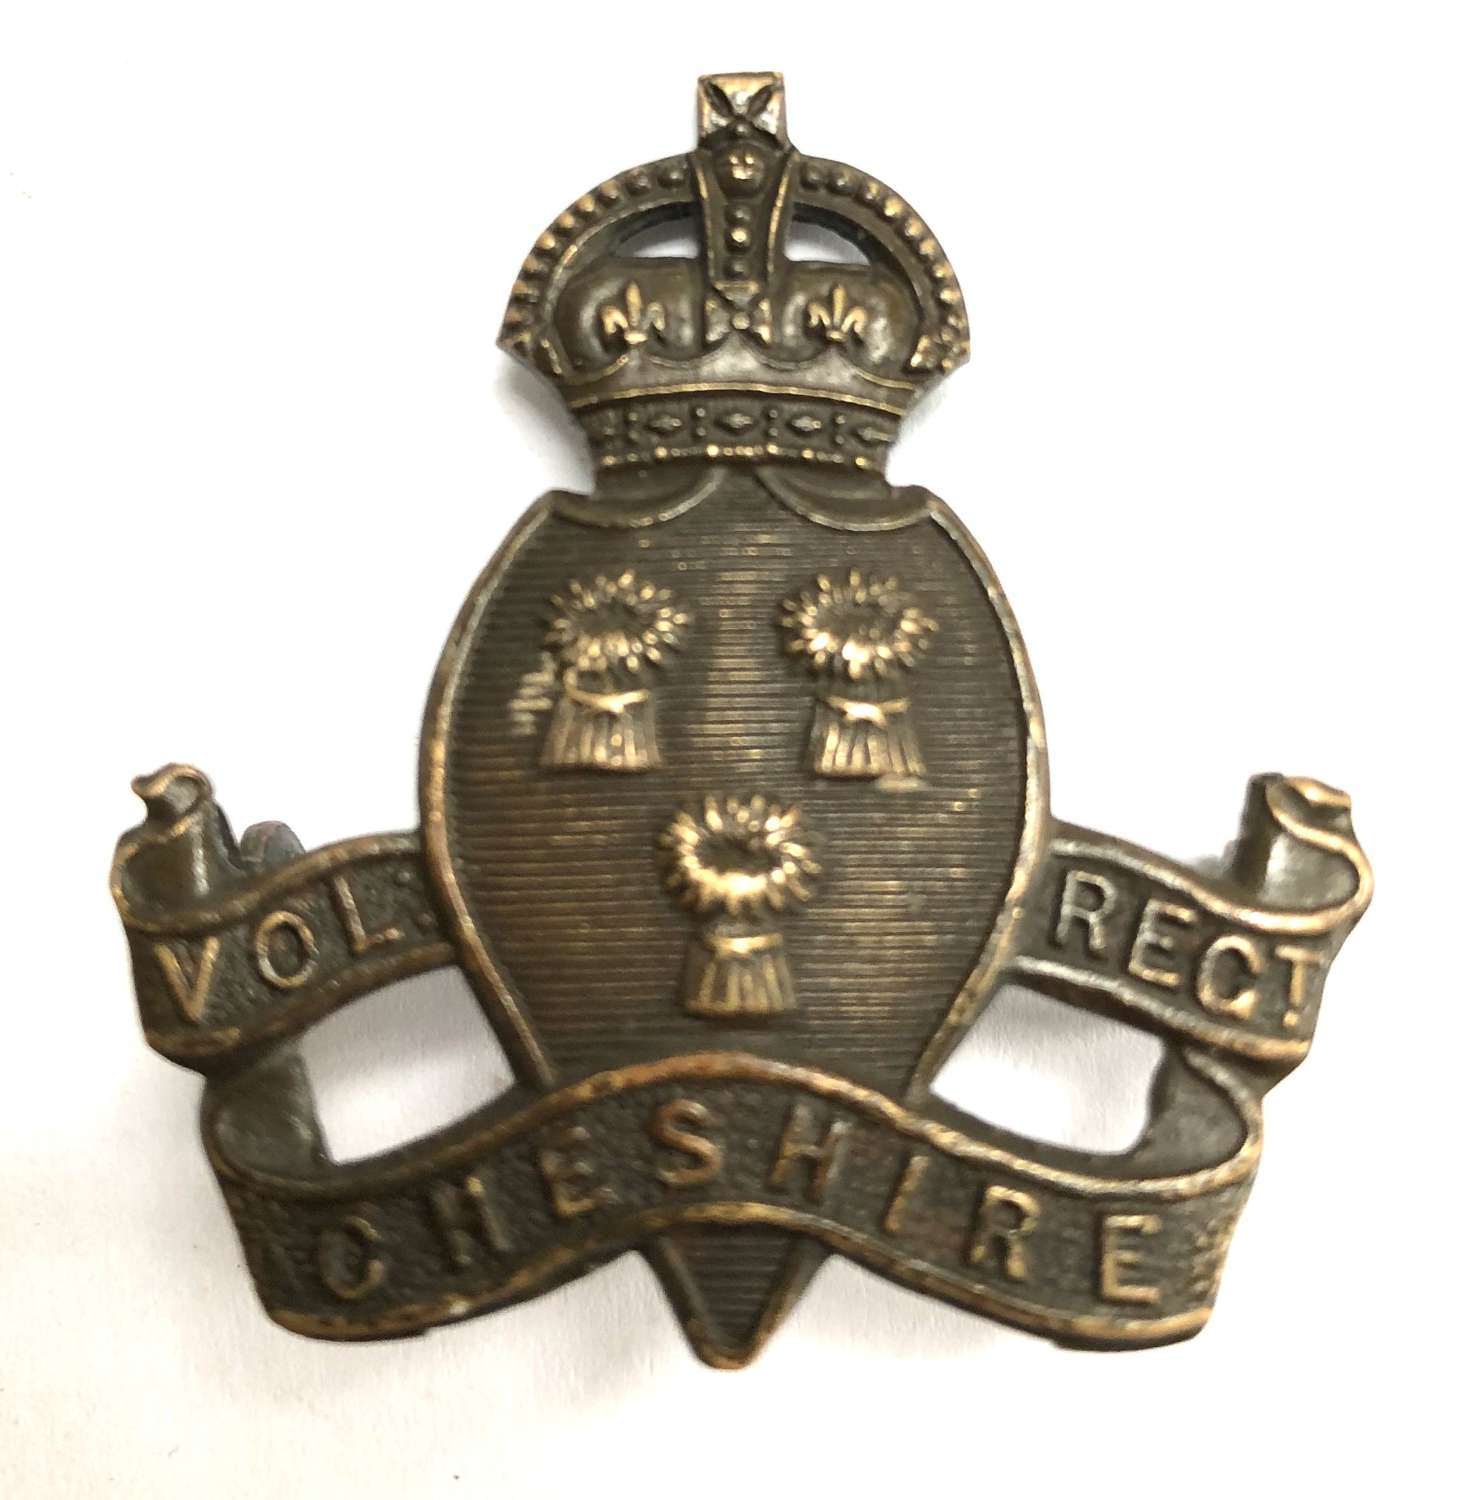 Cheshire Volunteer Regiment WW1 VTC Officer’s cap badge